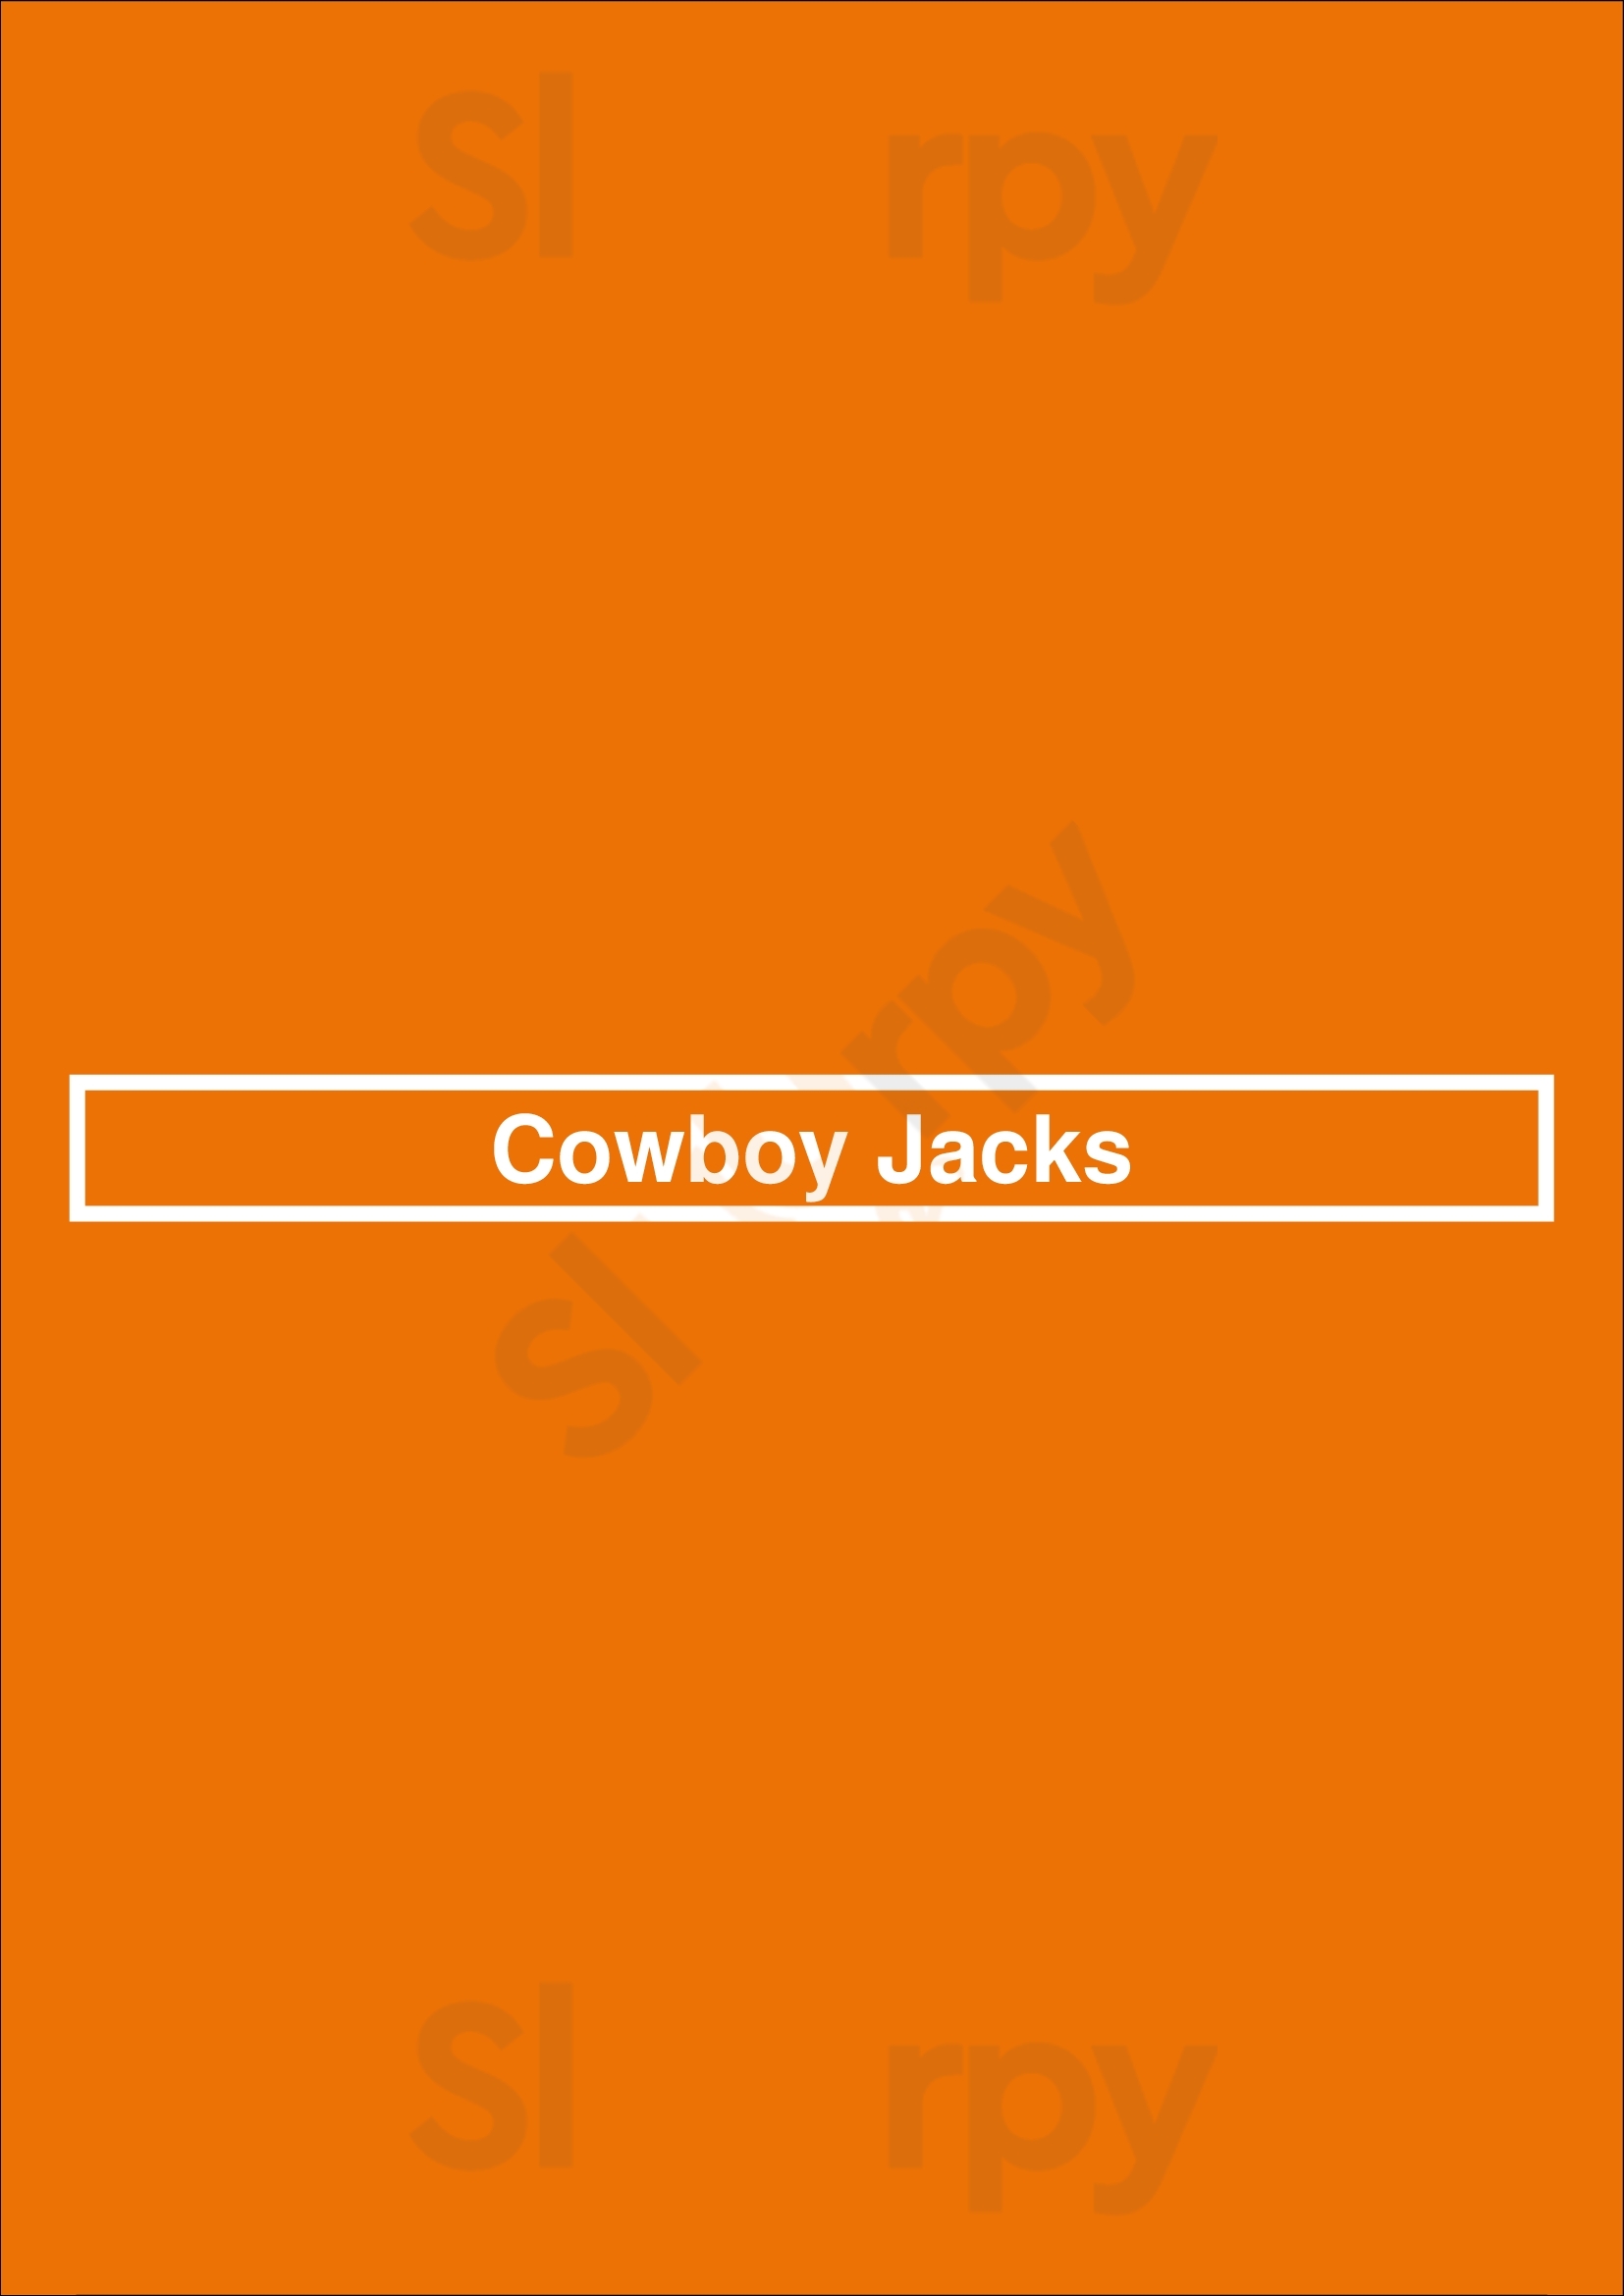 Cowboy Jacks Minneapolis Menu - 1